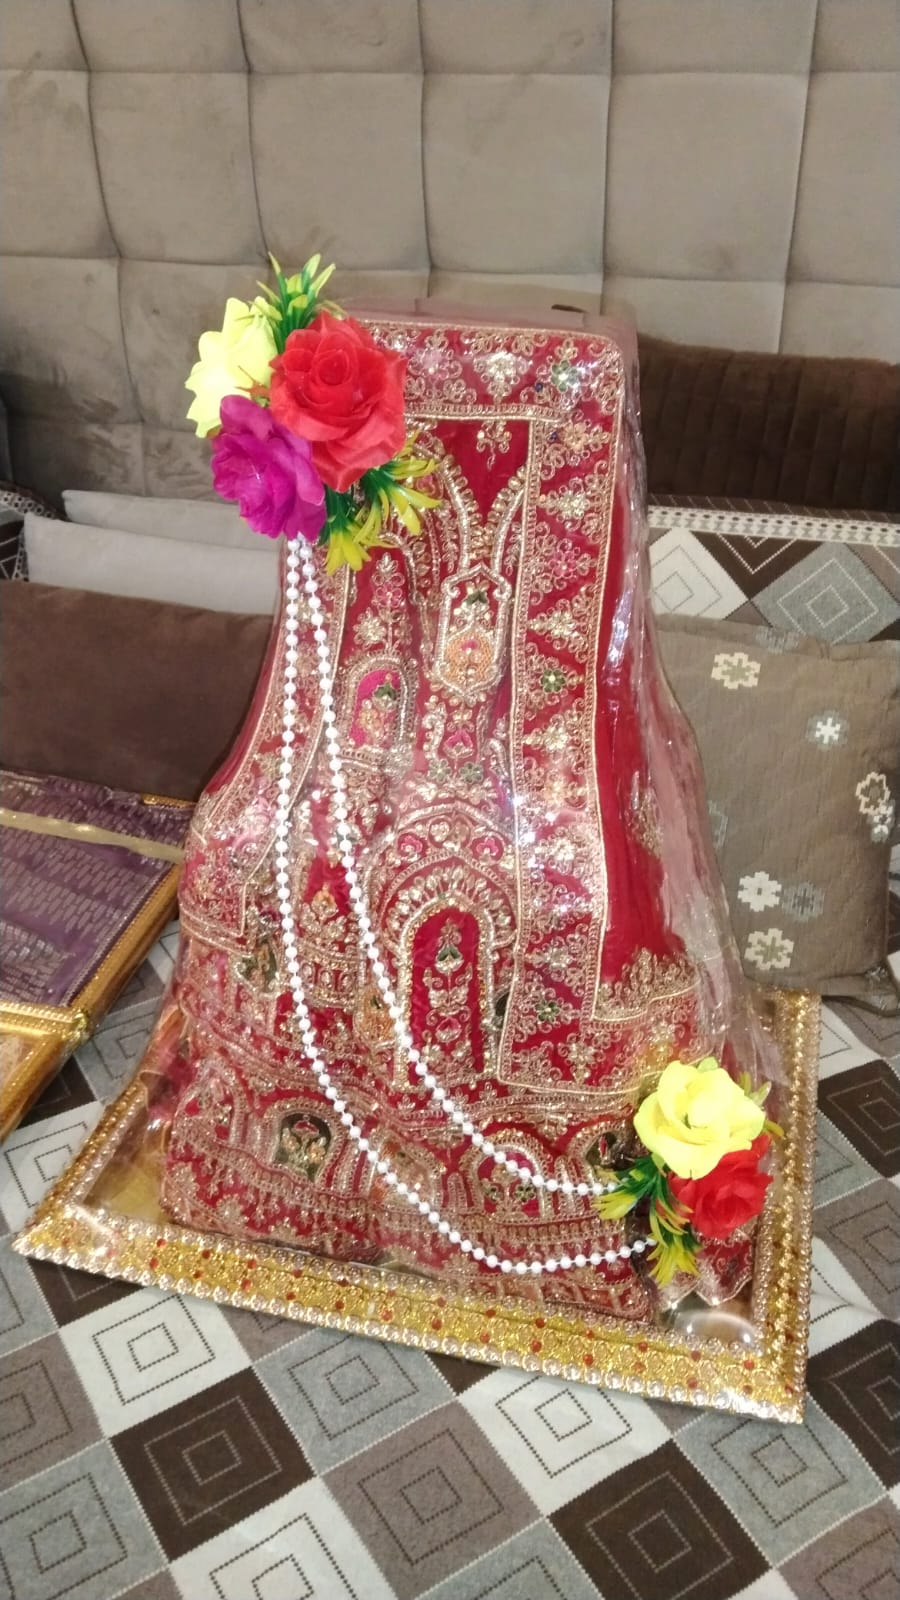 Decorative Wedding Gift Packing At Your Home Wee Do. Call Deepak - 9213911456OtherAnnouncementsSouth DelhiHauz Khas